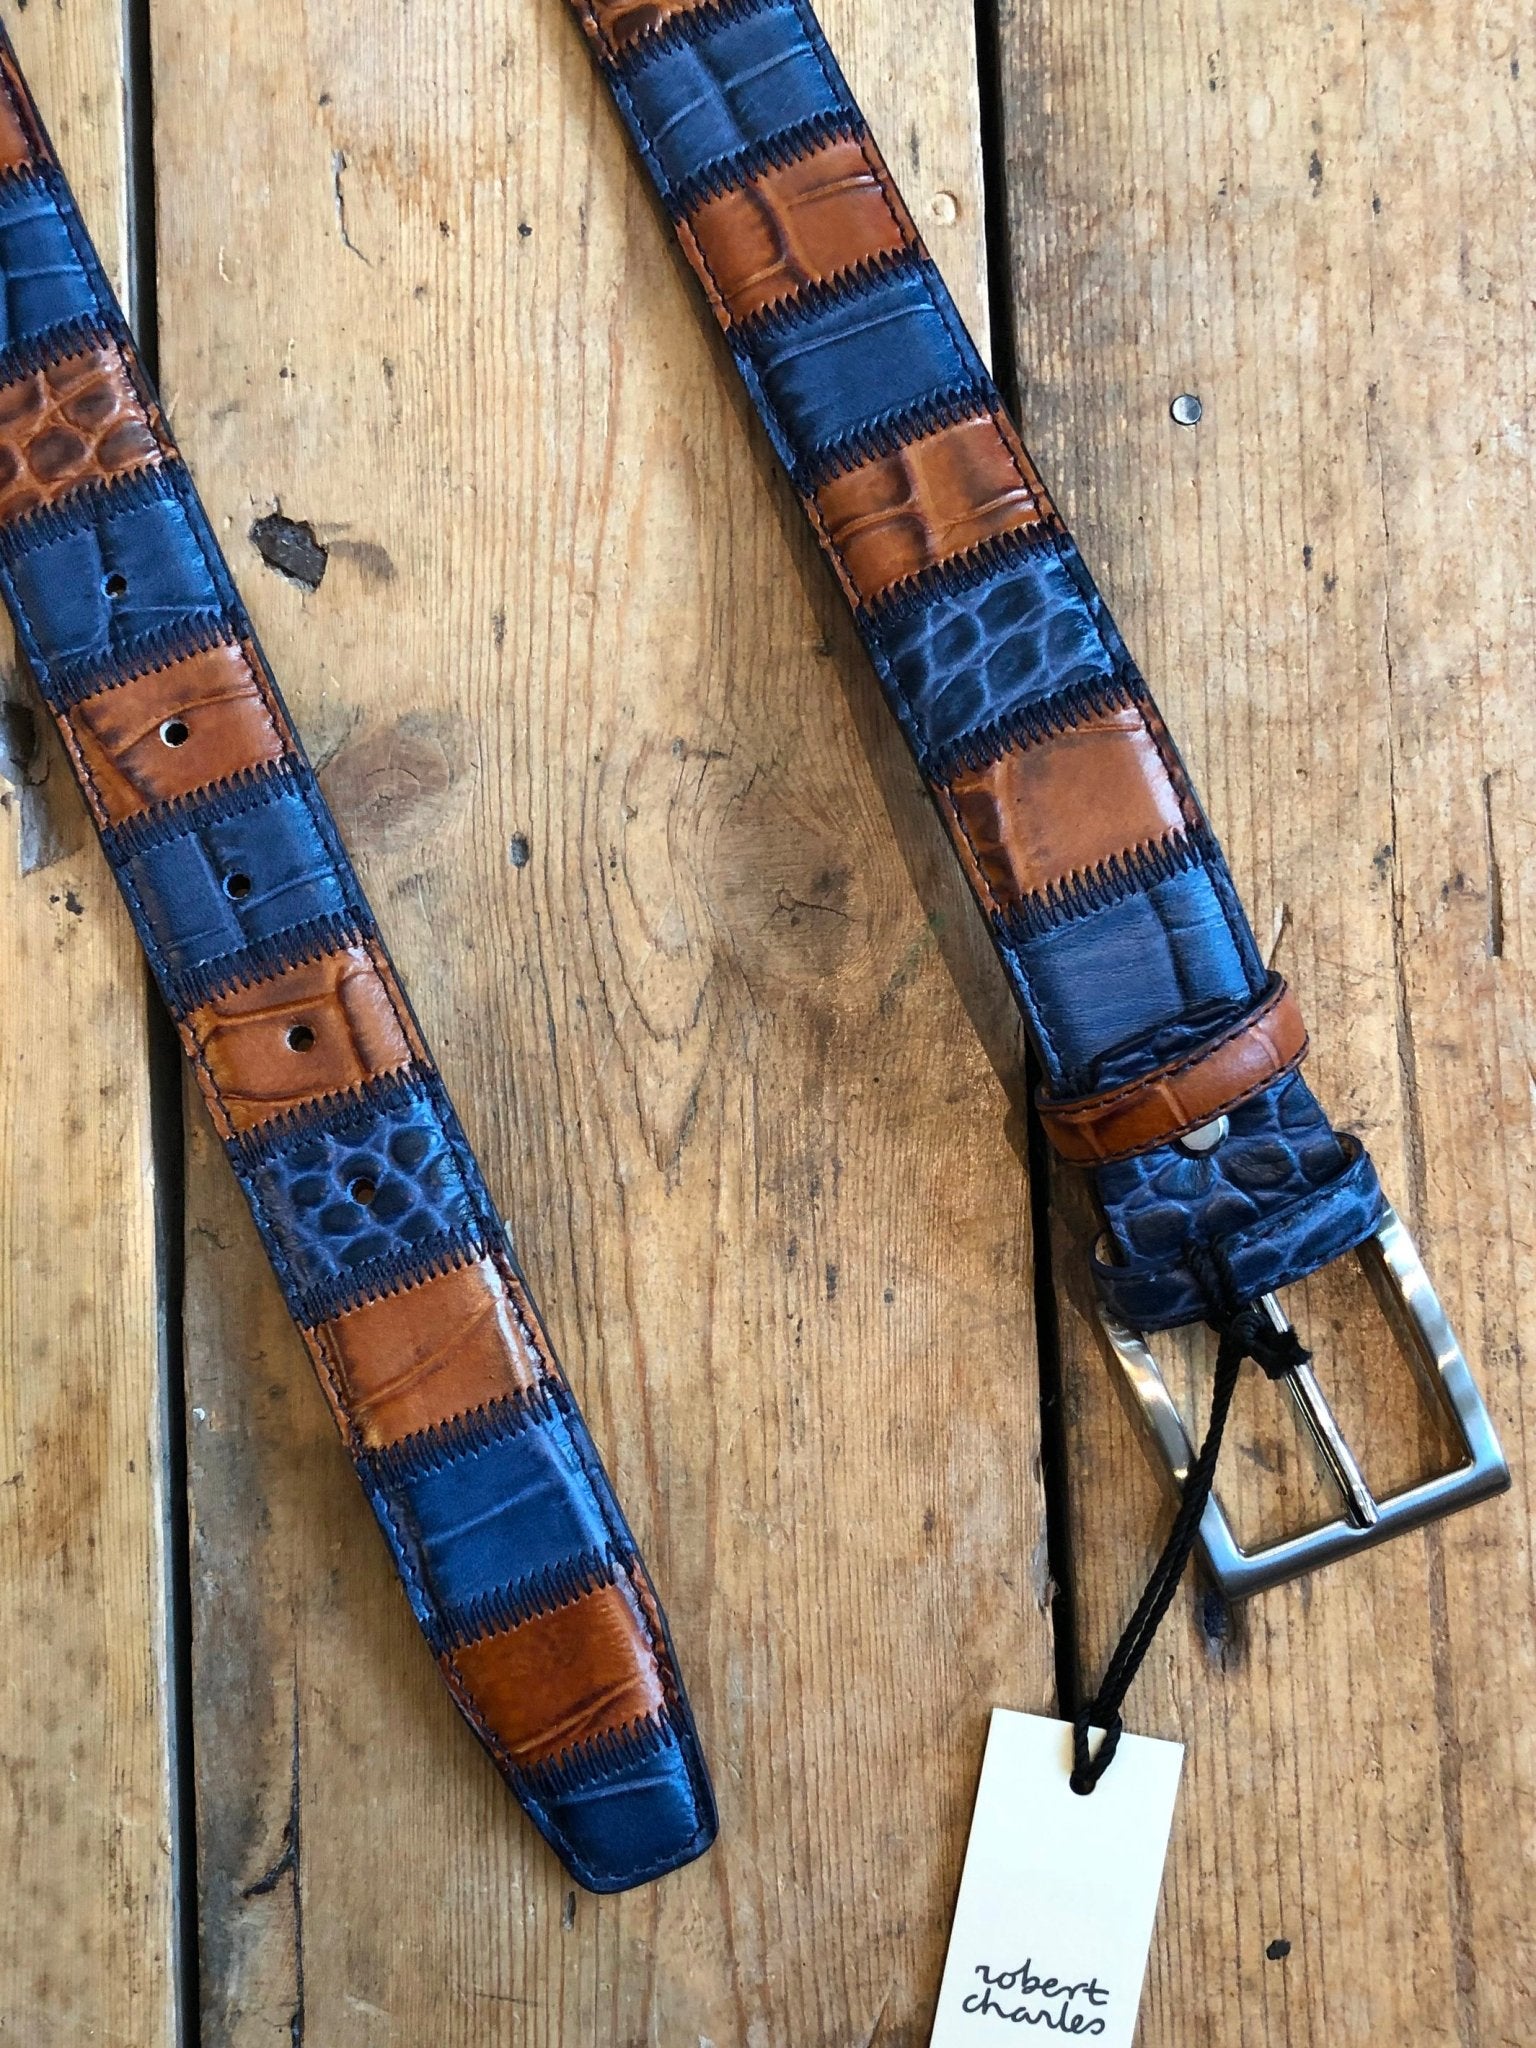 4elementsclothingRobert CharlesRobert Charles Belts - 1628 Patchwork Blue / Tan Mens Belt - Made in Italy - 100% LeatherBelts1628/35/S